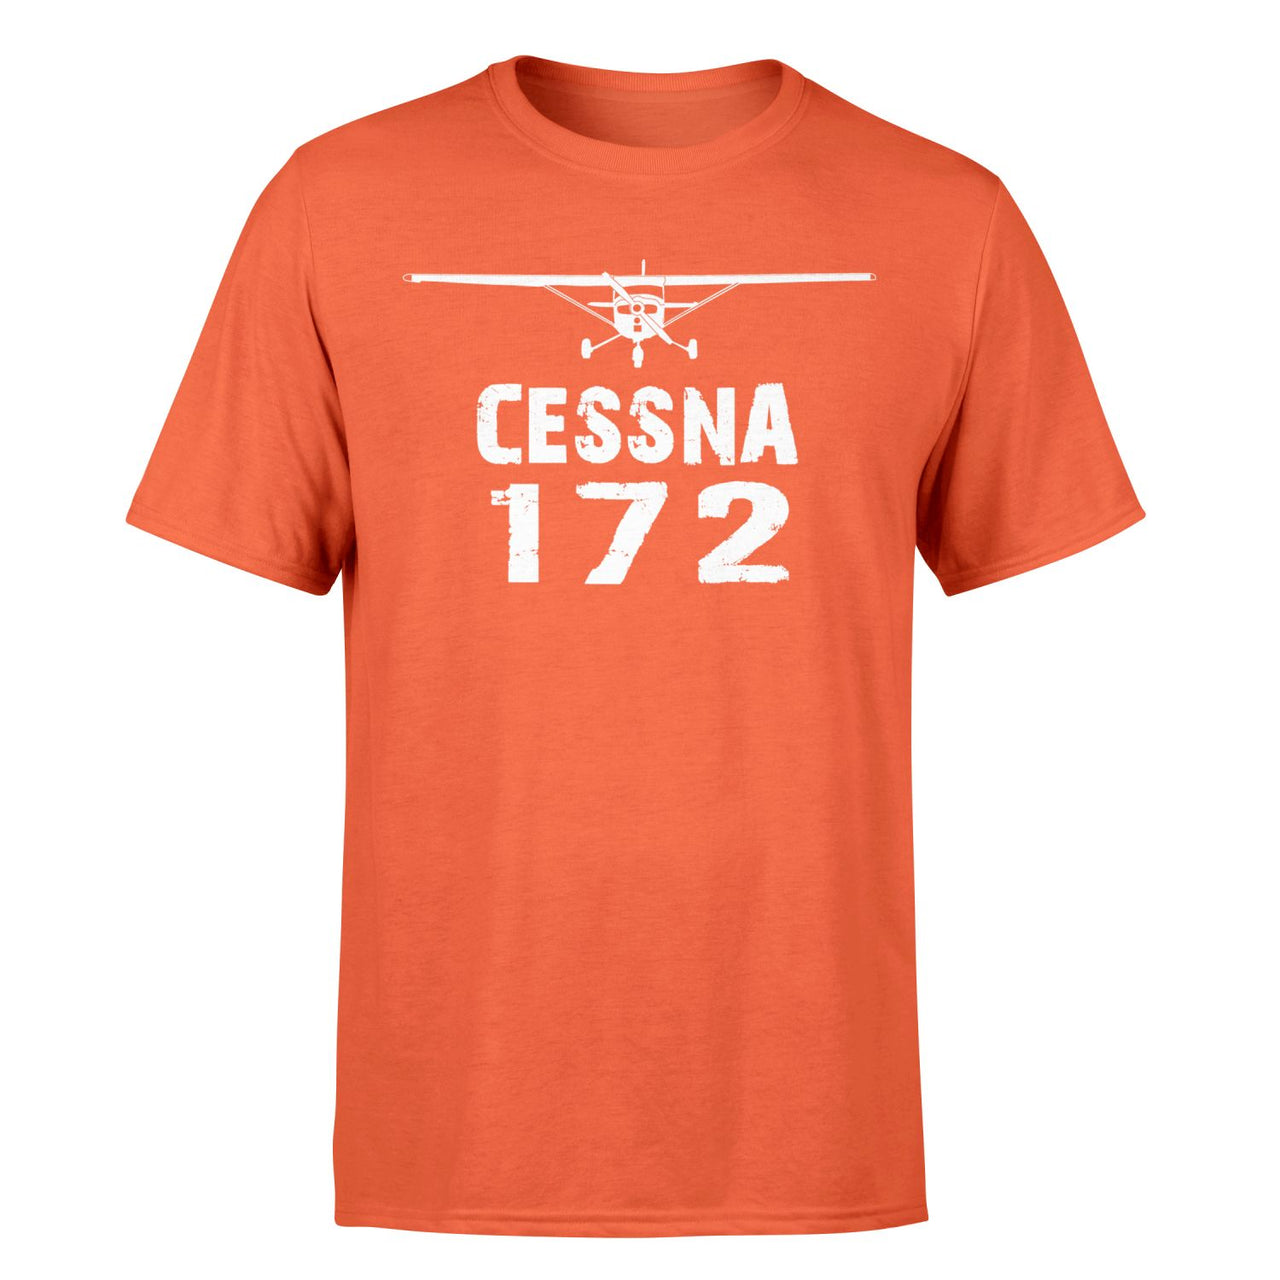 Cessna 172 & Plane Designed T-Shirts